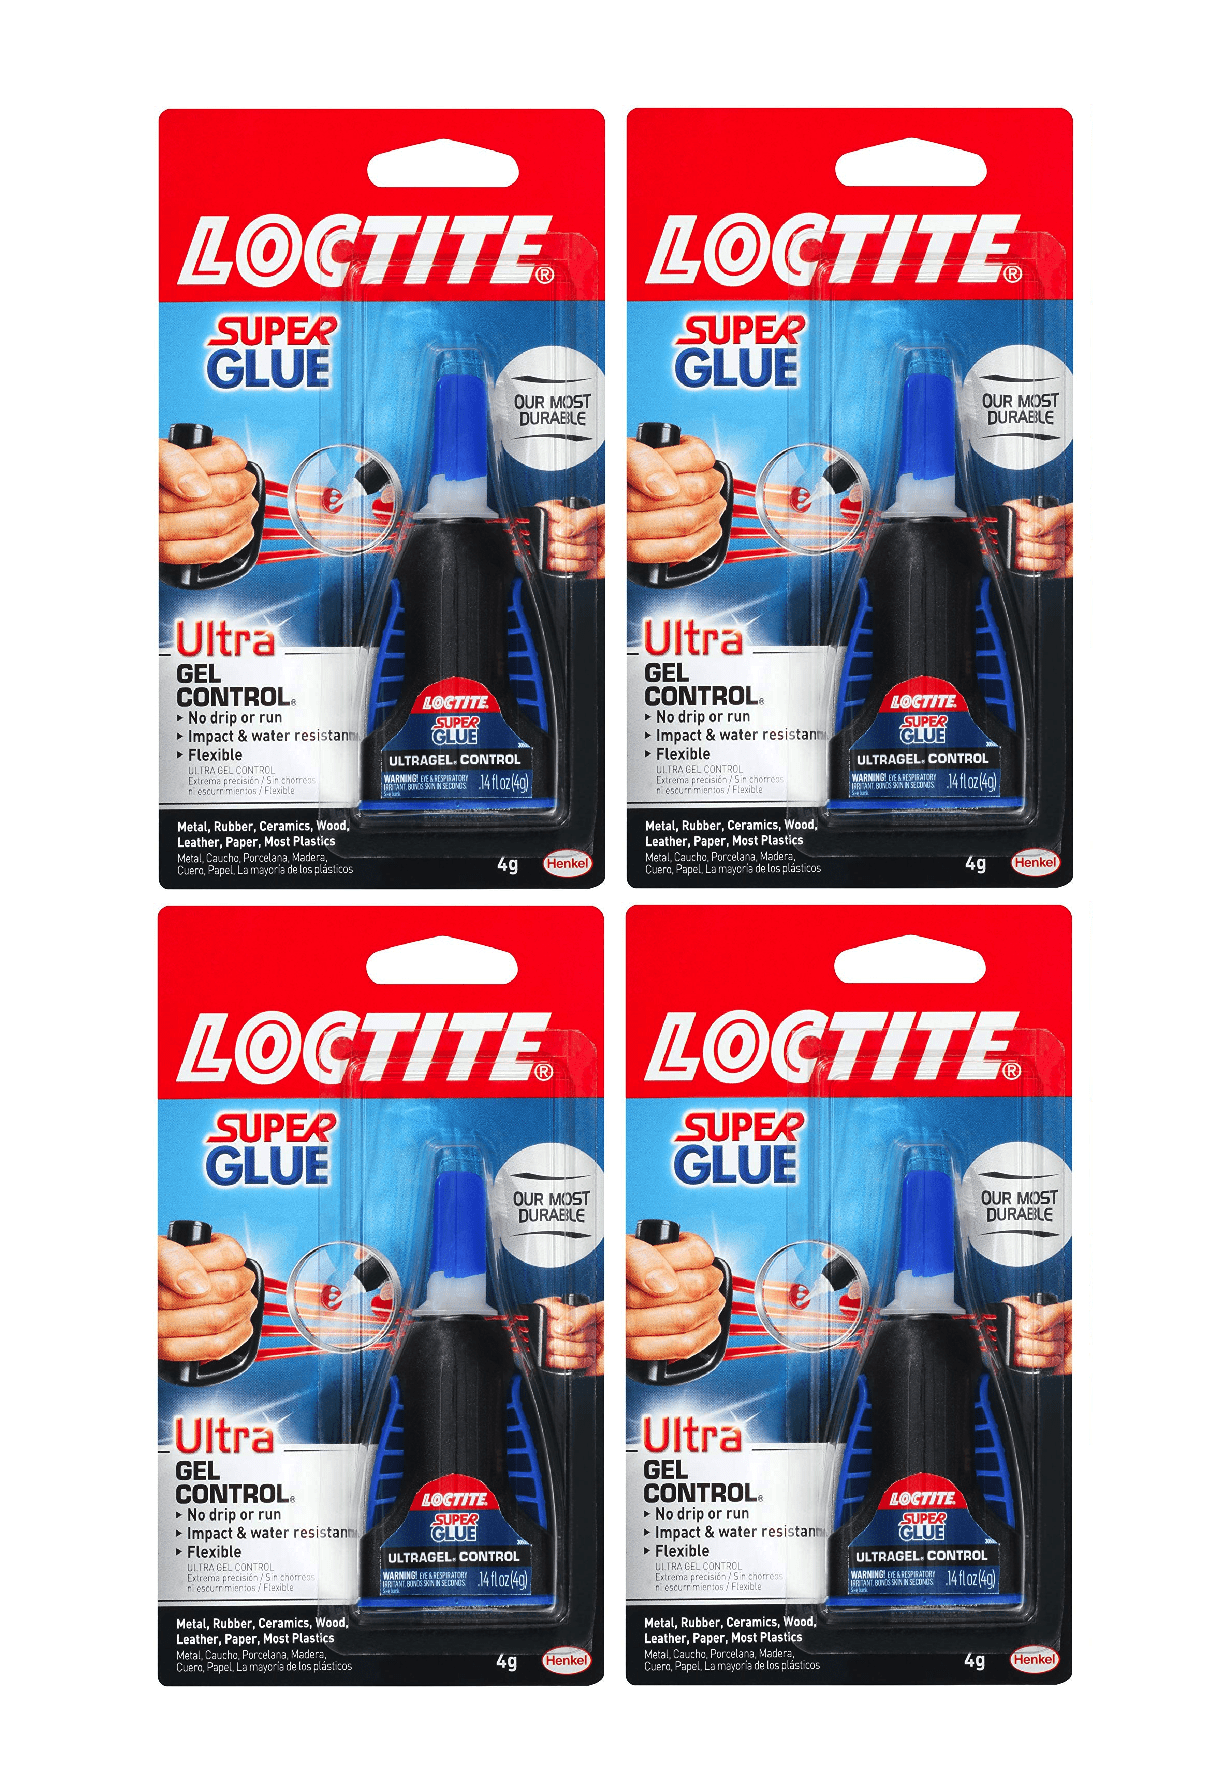 Loctite Gel Control Super Glue, .14 oz, Super Glue Liquid, #MGLSG141